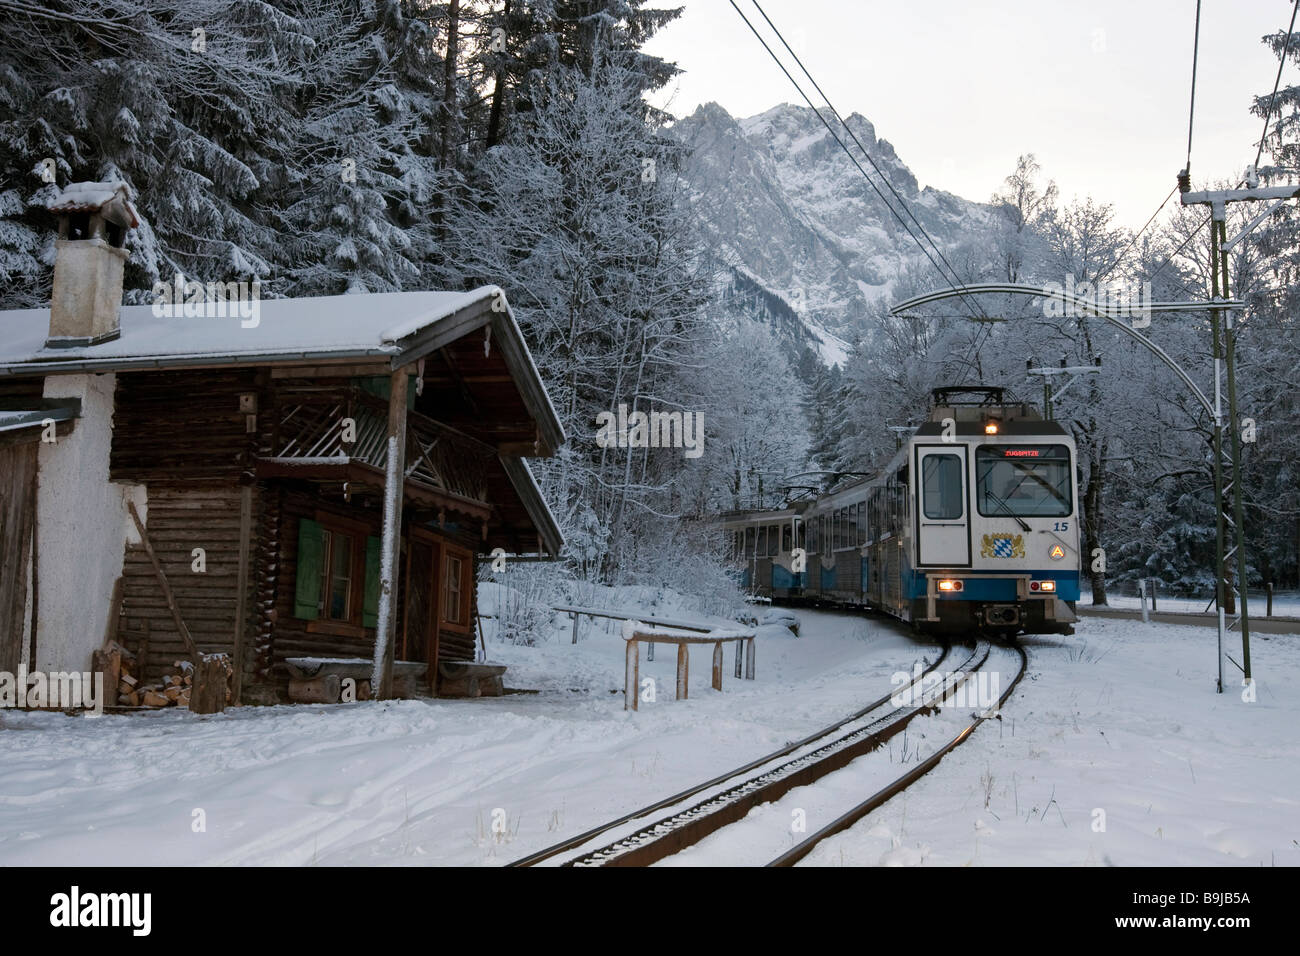 Bayerische Zugspitzbahn Azienda ferroviaria treno nella parte anteriore del Monte Zugspitze, Cog Railway, Grainau, Baviera, Germania, Europa Foto Stock